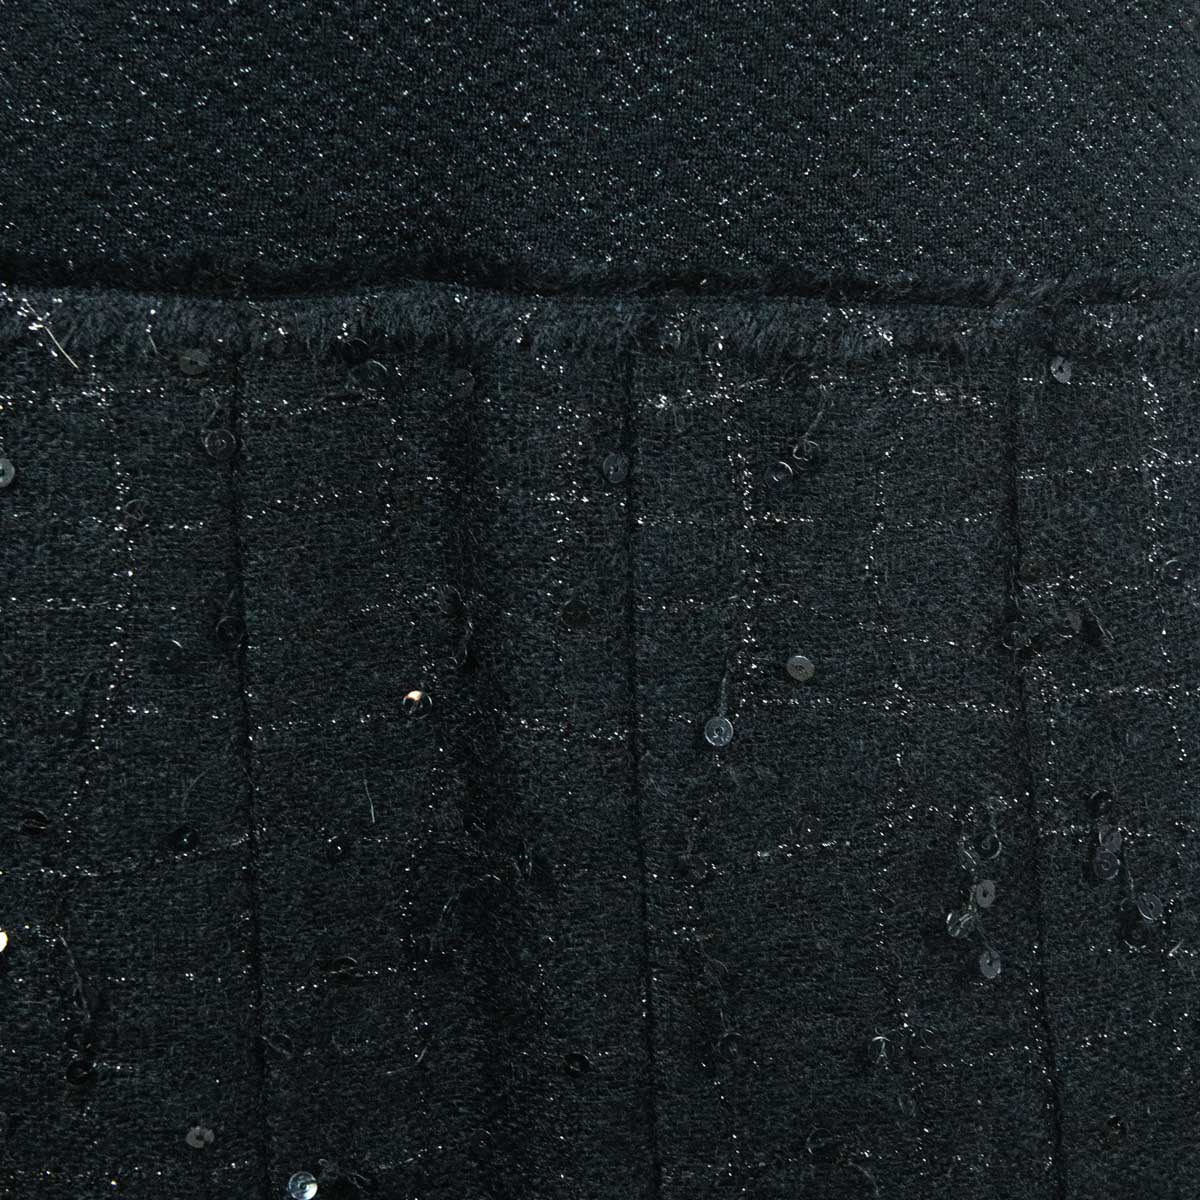 Chanel Black Cashmere Sequin Embellished Dress Size S | FR 38 - Love that Bag etc - Preowned Authentic Designer Handbags & Preloved Fashions